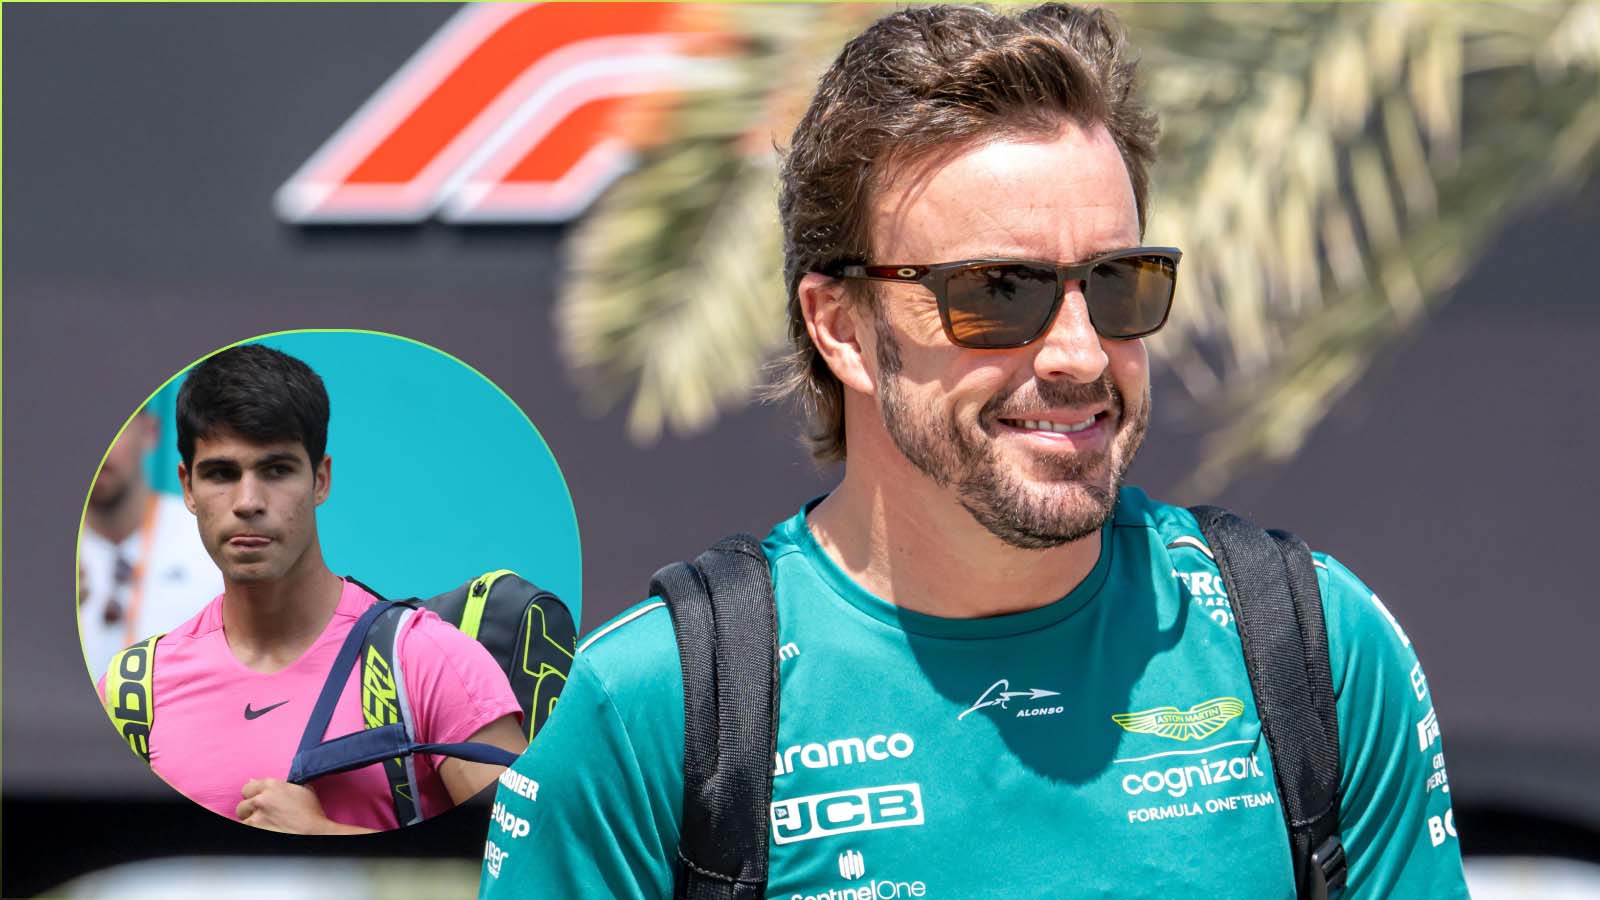 Fernando Alonso and Carlos Alcaraz image split, March 2023.